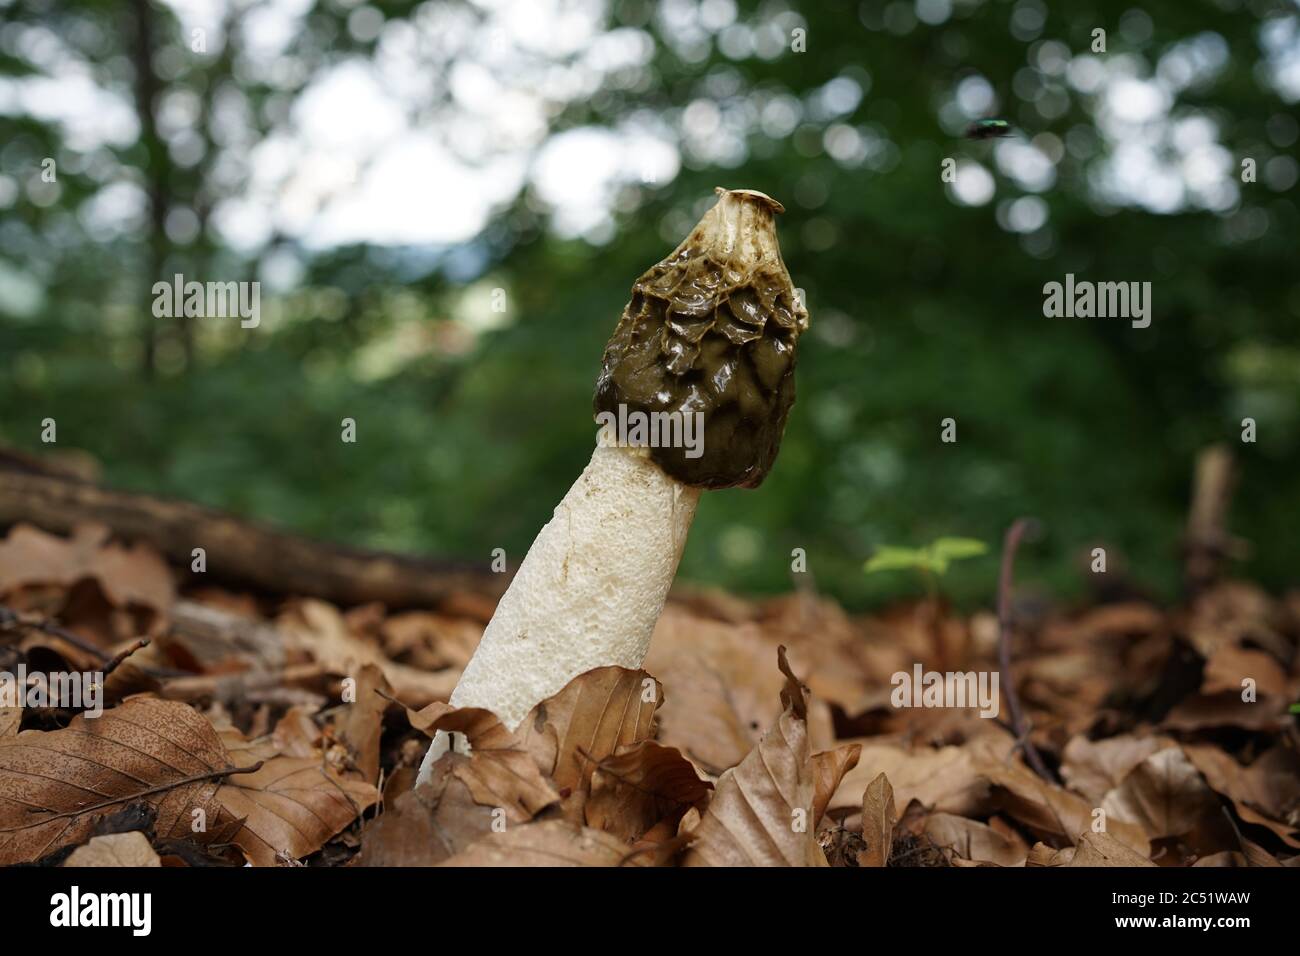 Devil's stinkhorn (Phallus rubicundus) - Picture Mushroom